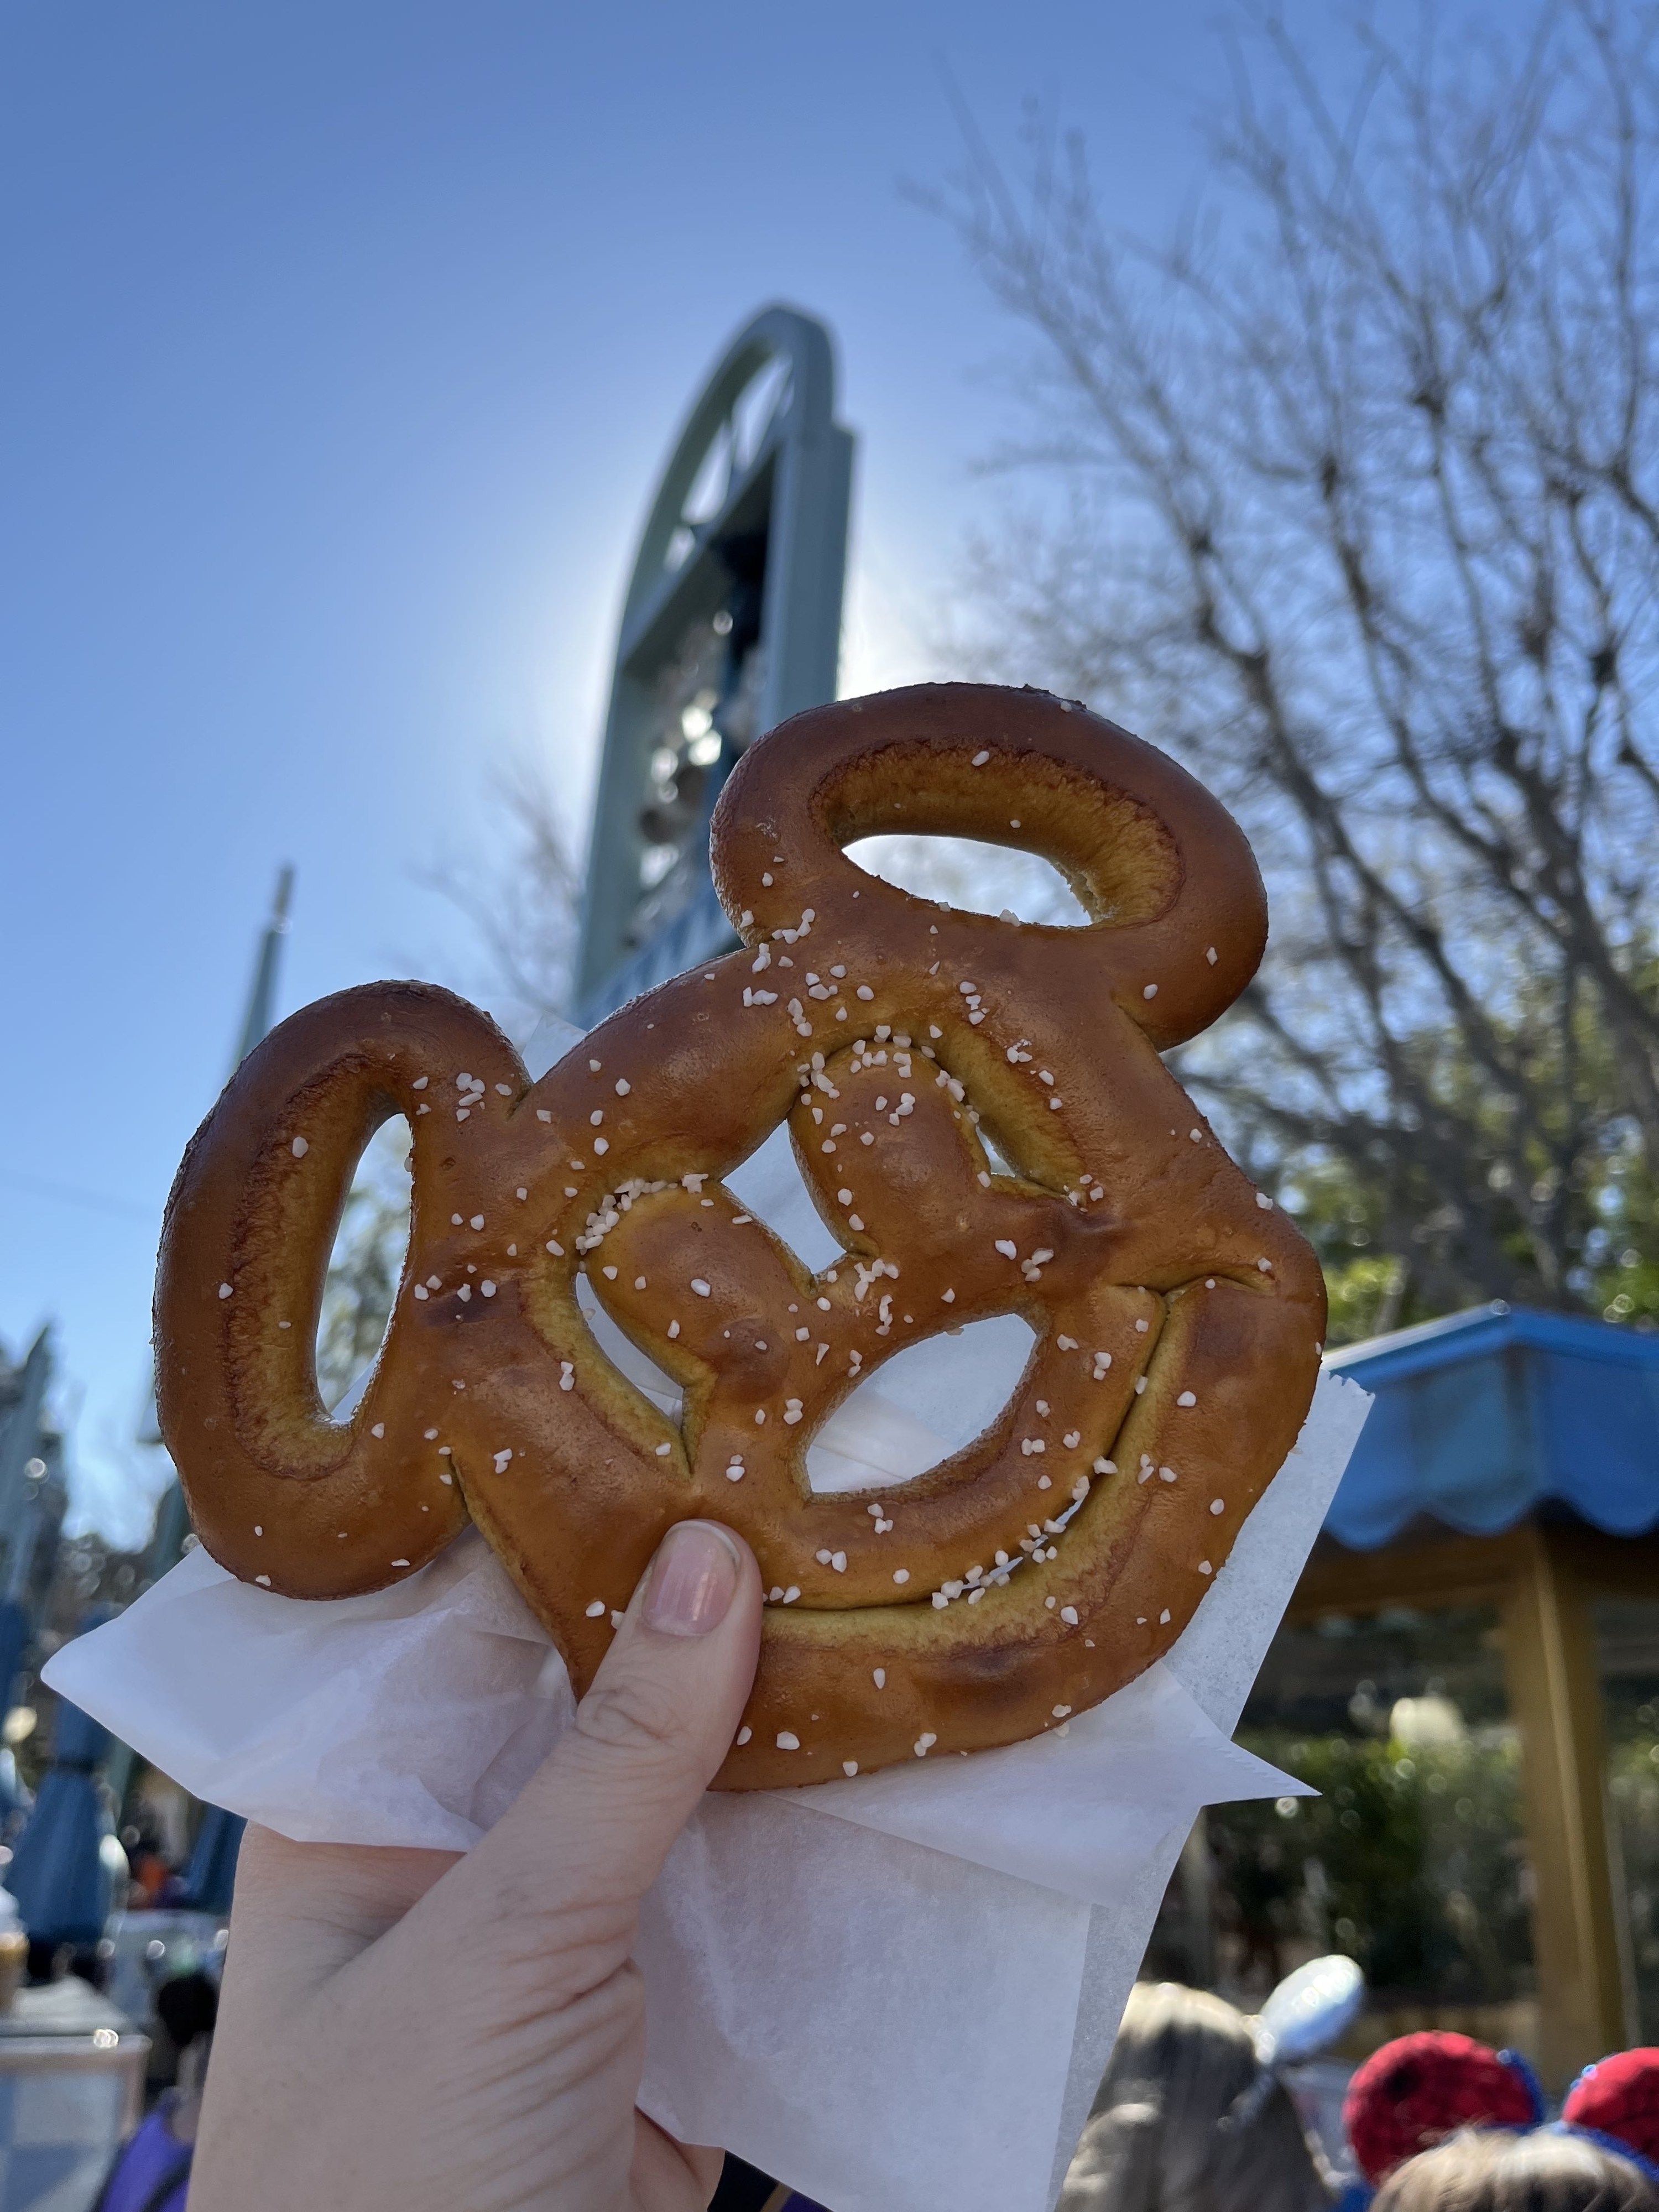 An image of a Mickey pretzel